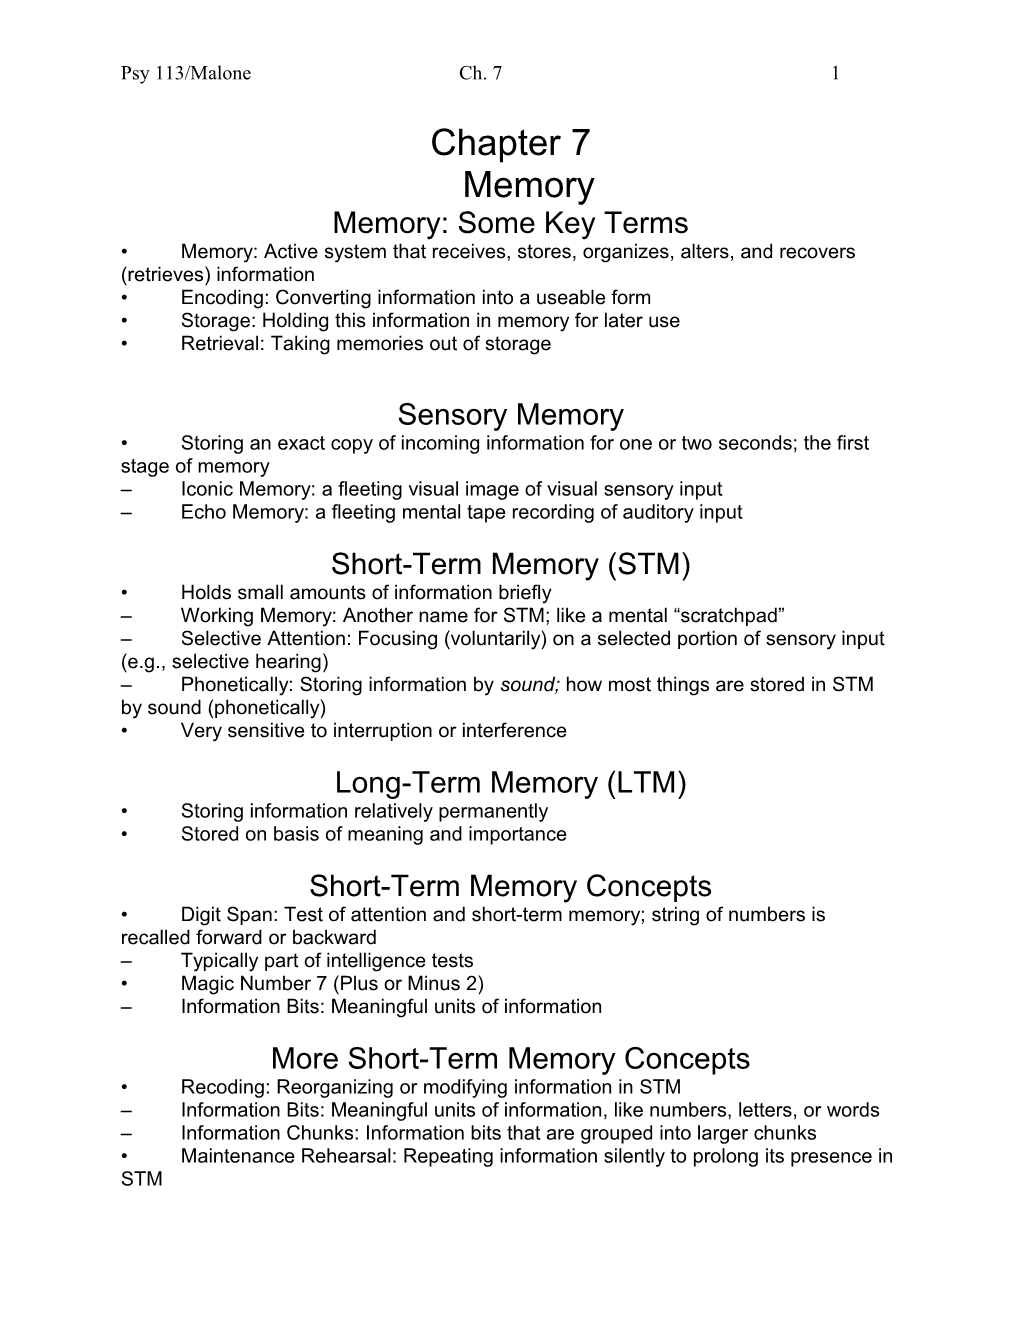 Memory: Some Key Terms